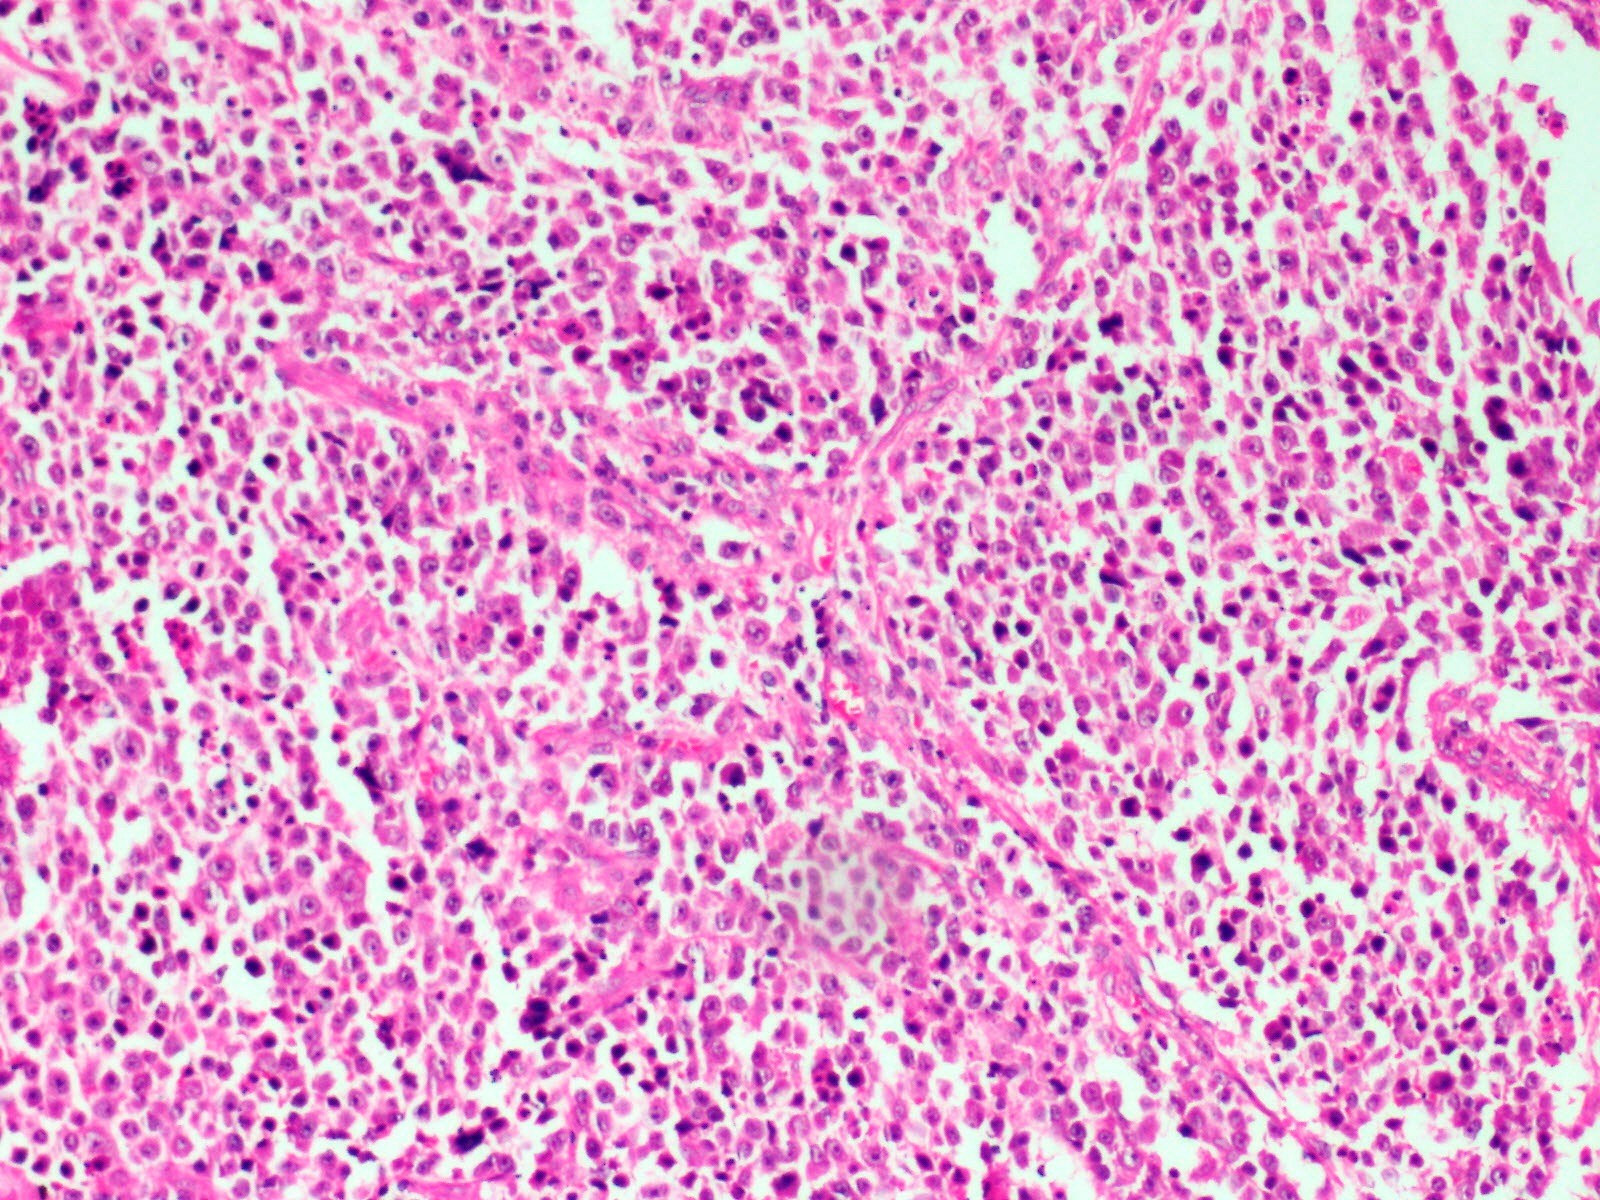 Large lymphoid tumor cells